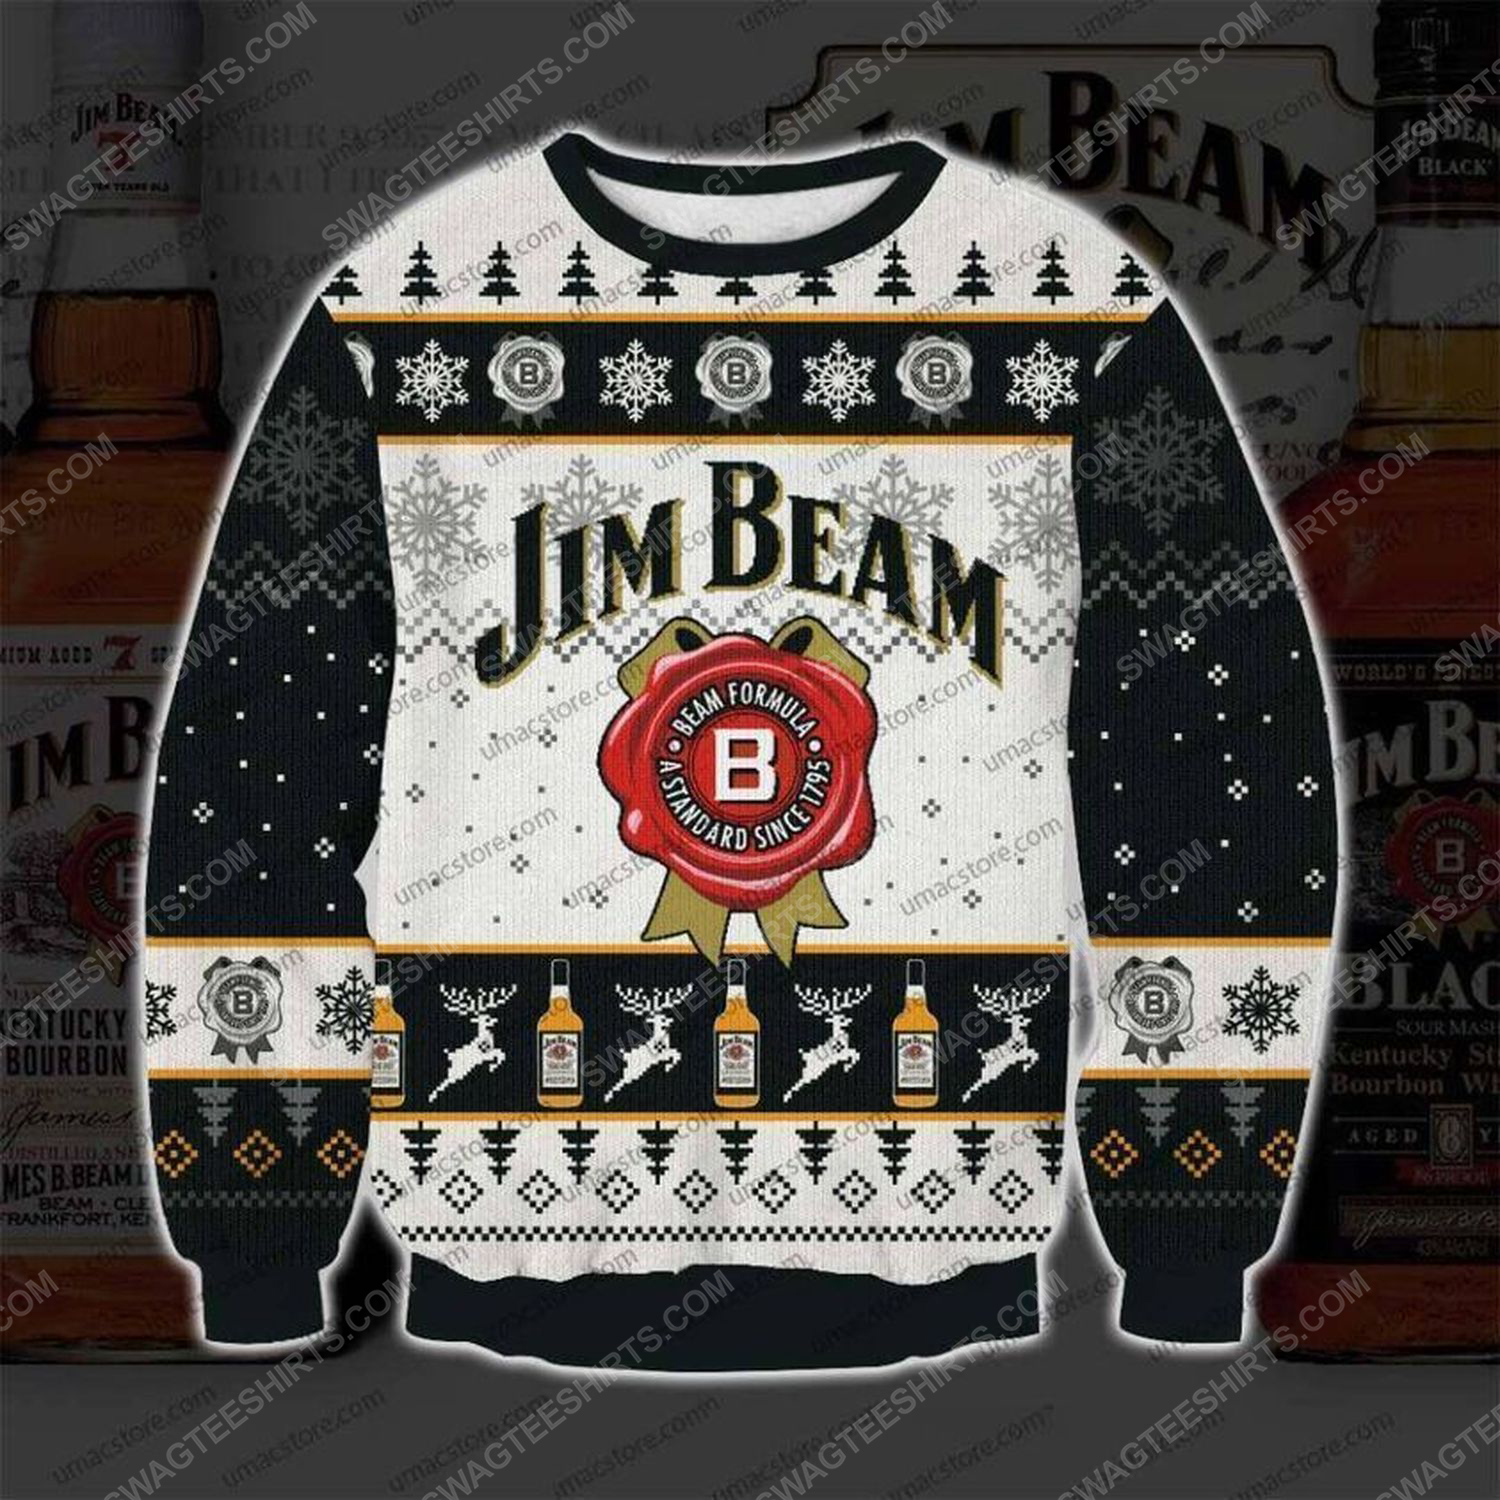 Jim beam bourbon whiskey ugly christmas sweater